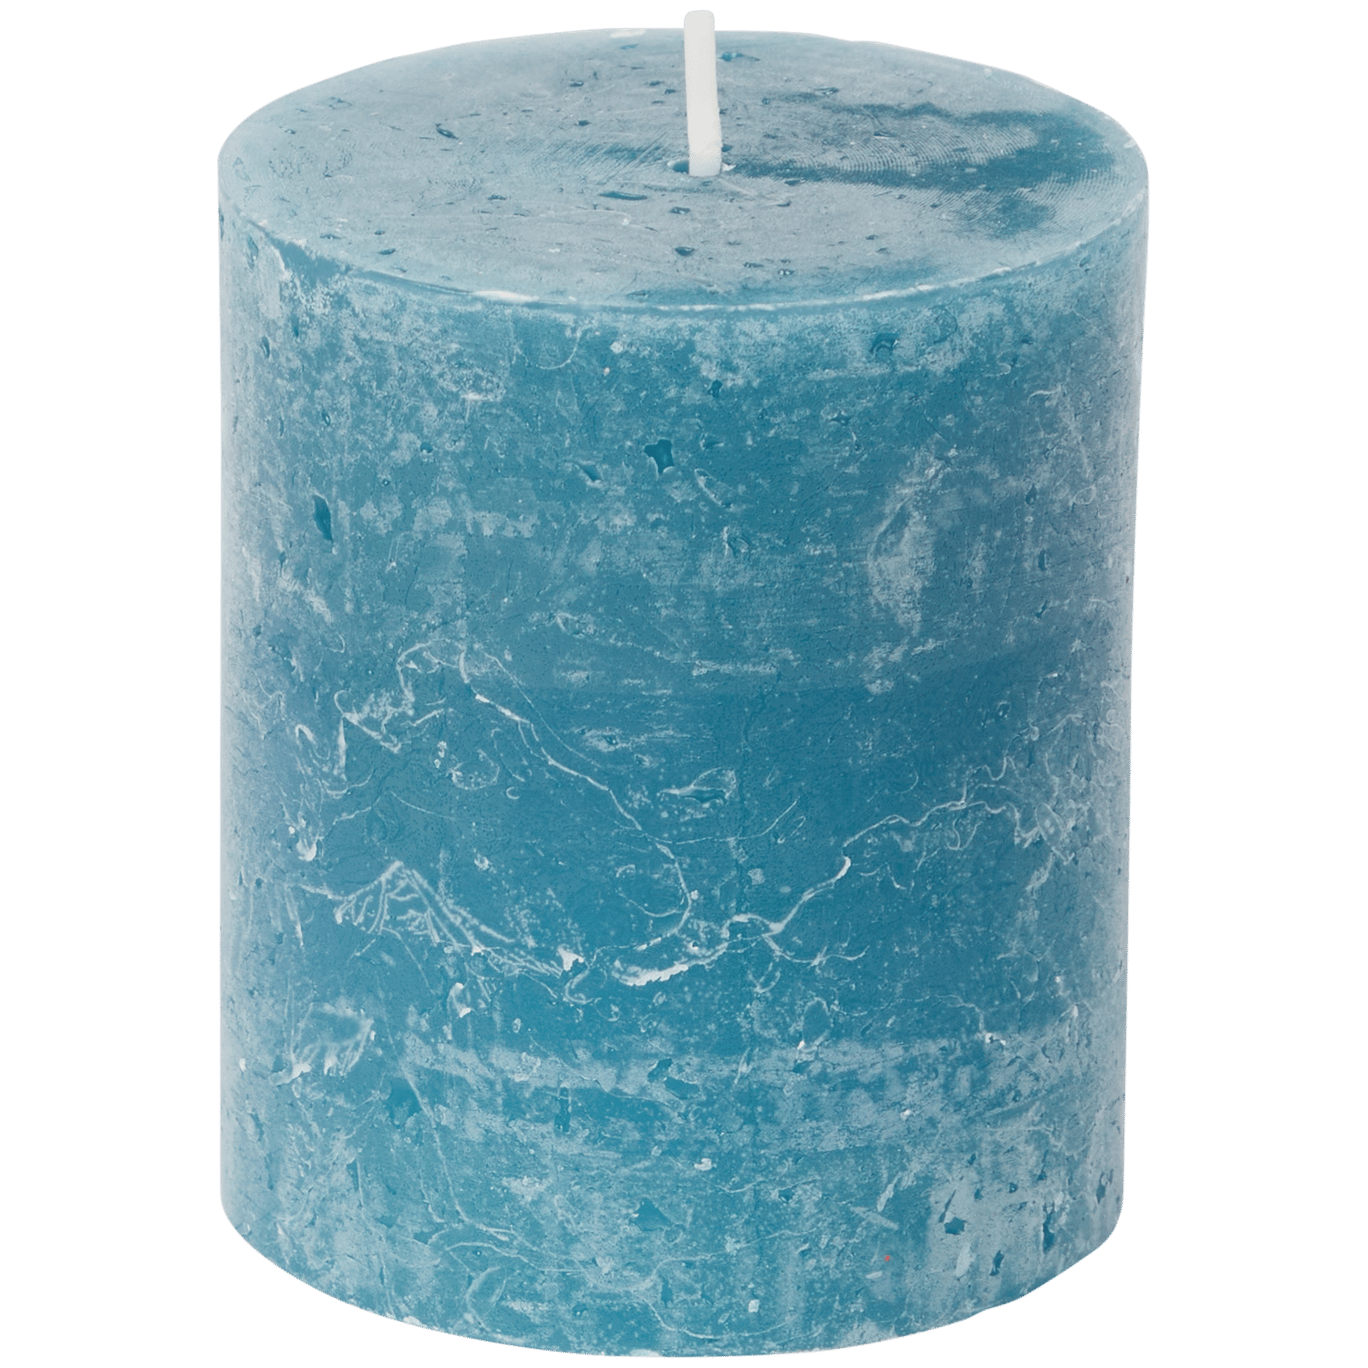 Candele pilastro rustico blu 80/65 candele rustiche  2pz-370168